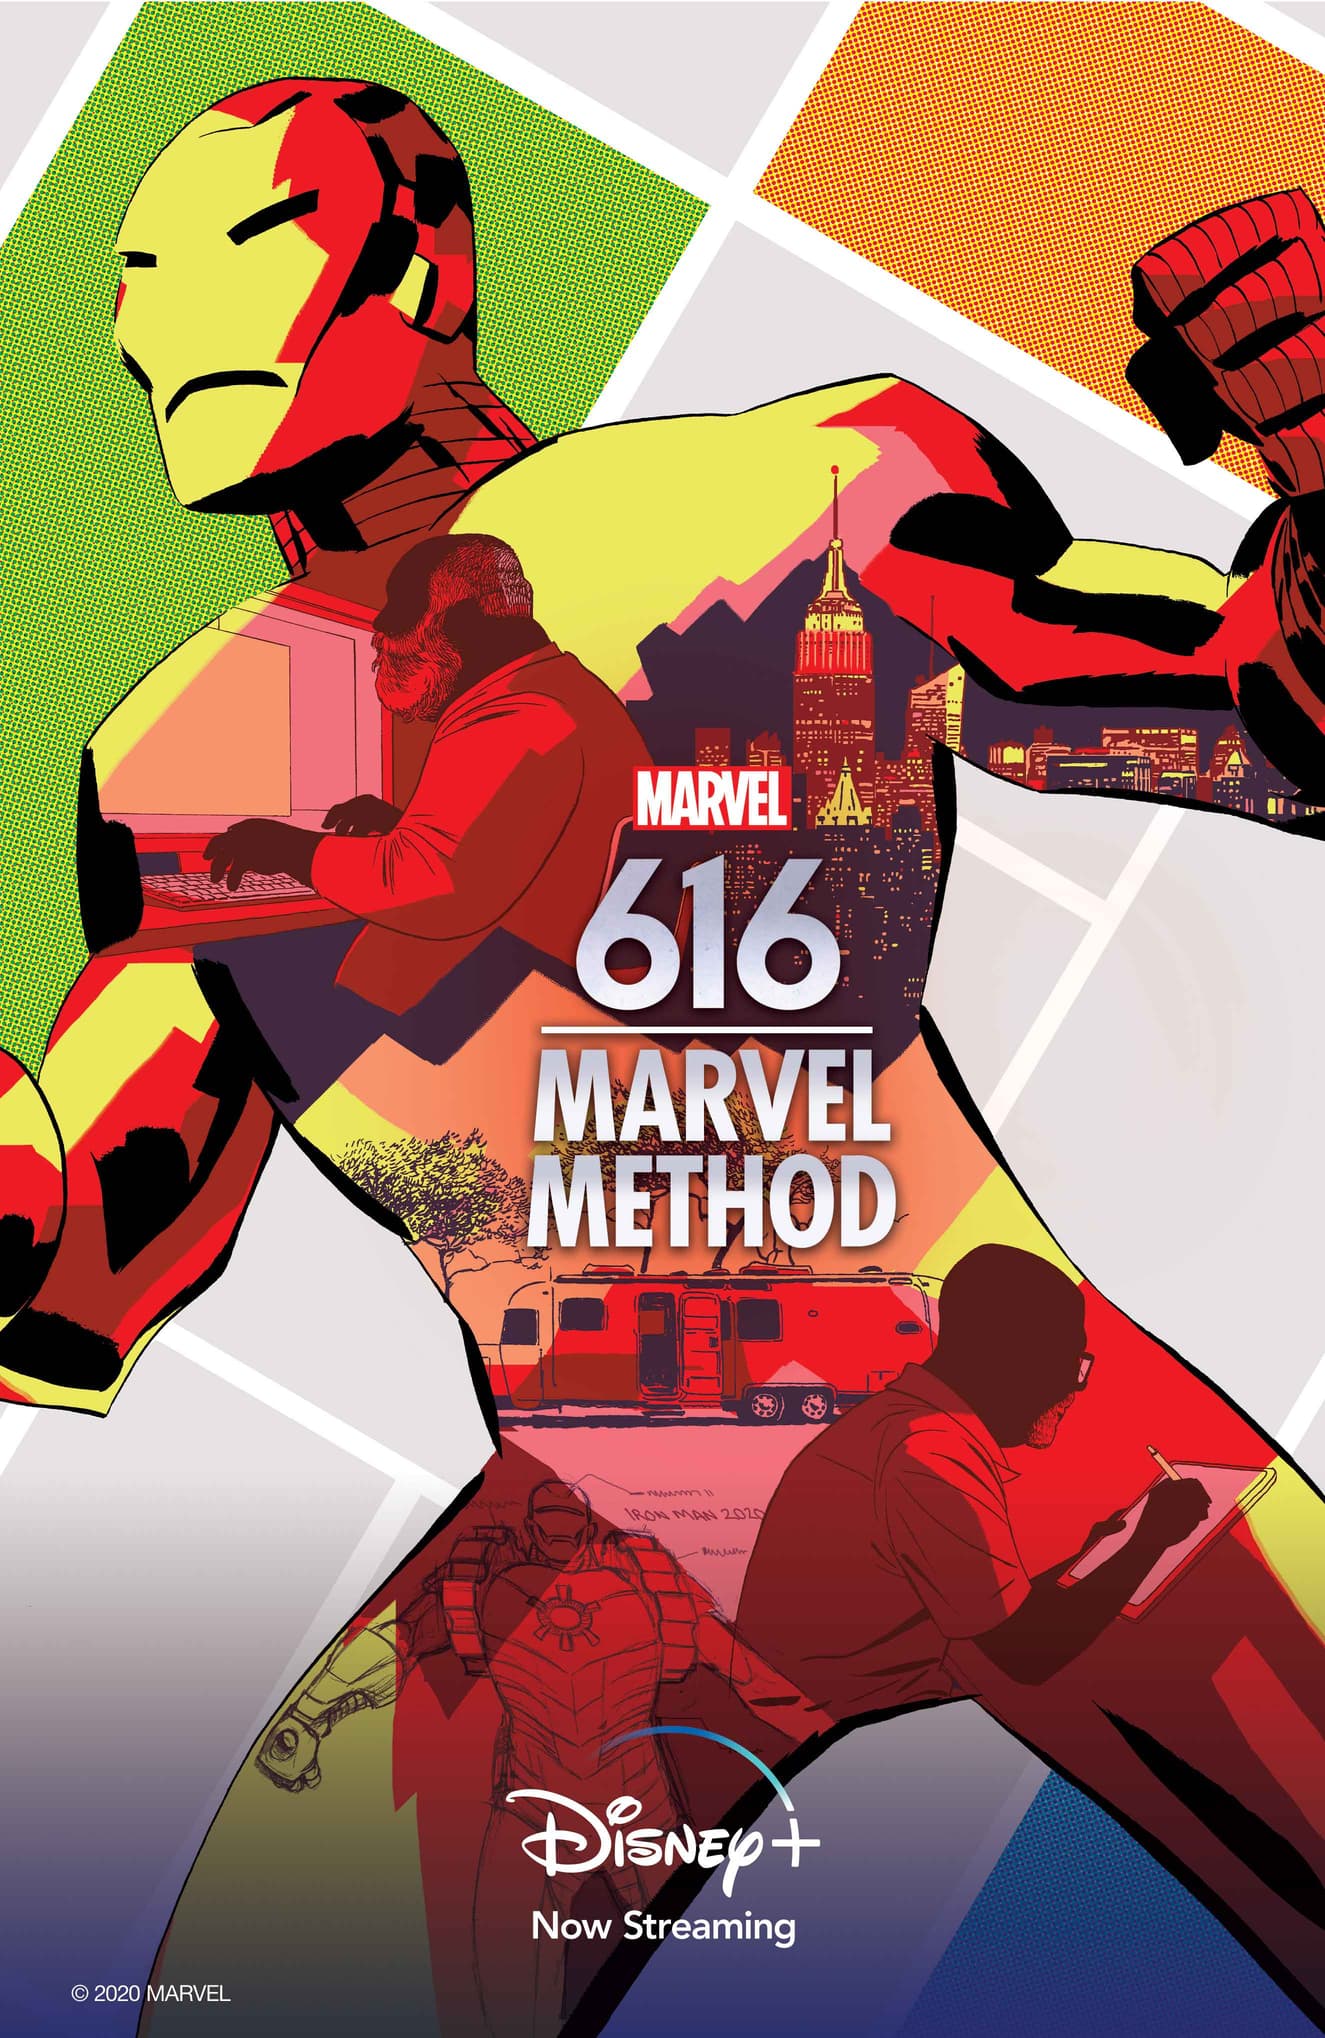 Marvel's 616 The Marvel Method